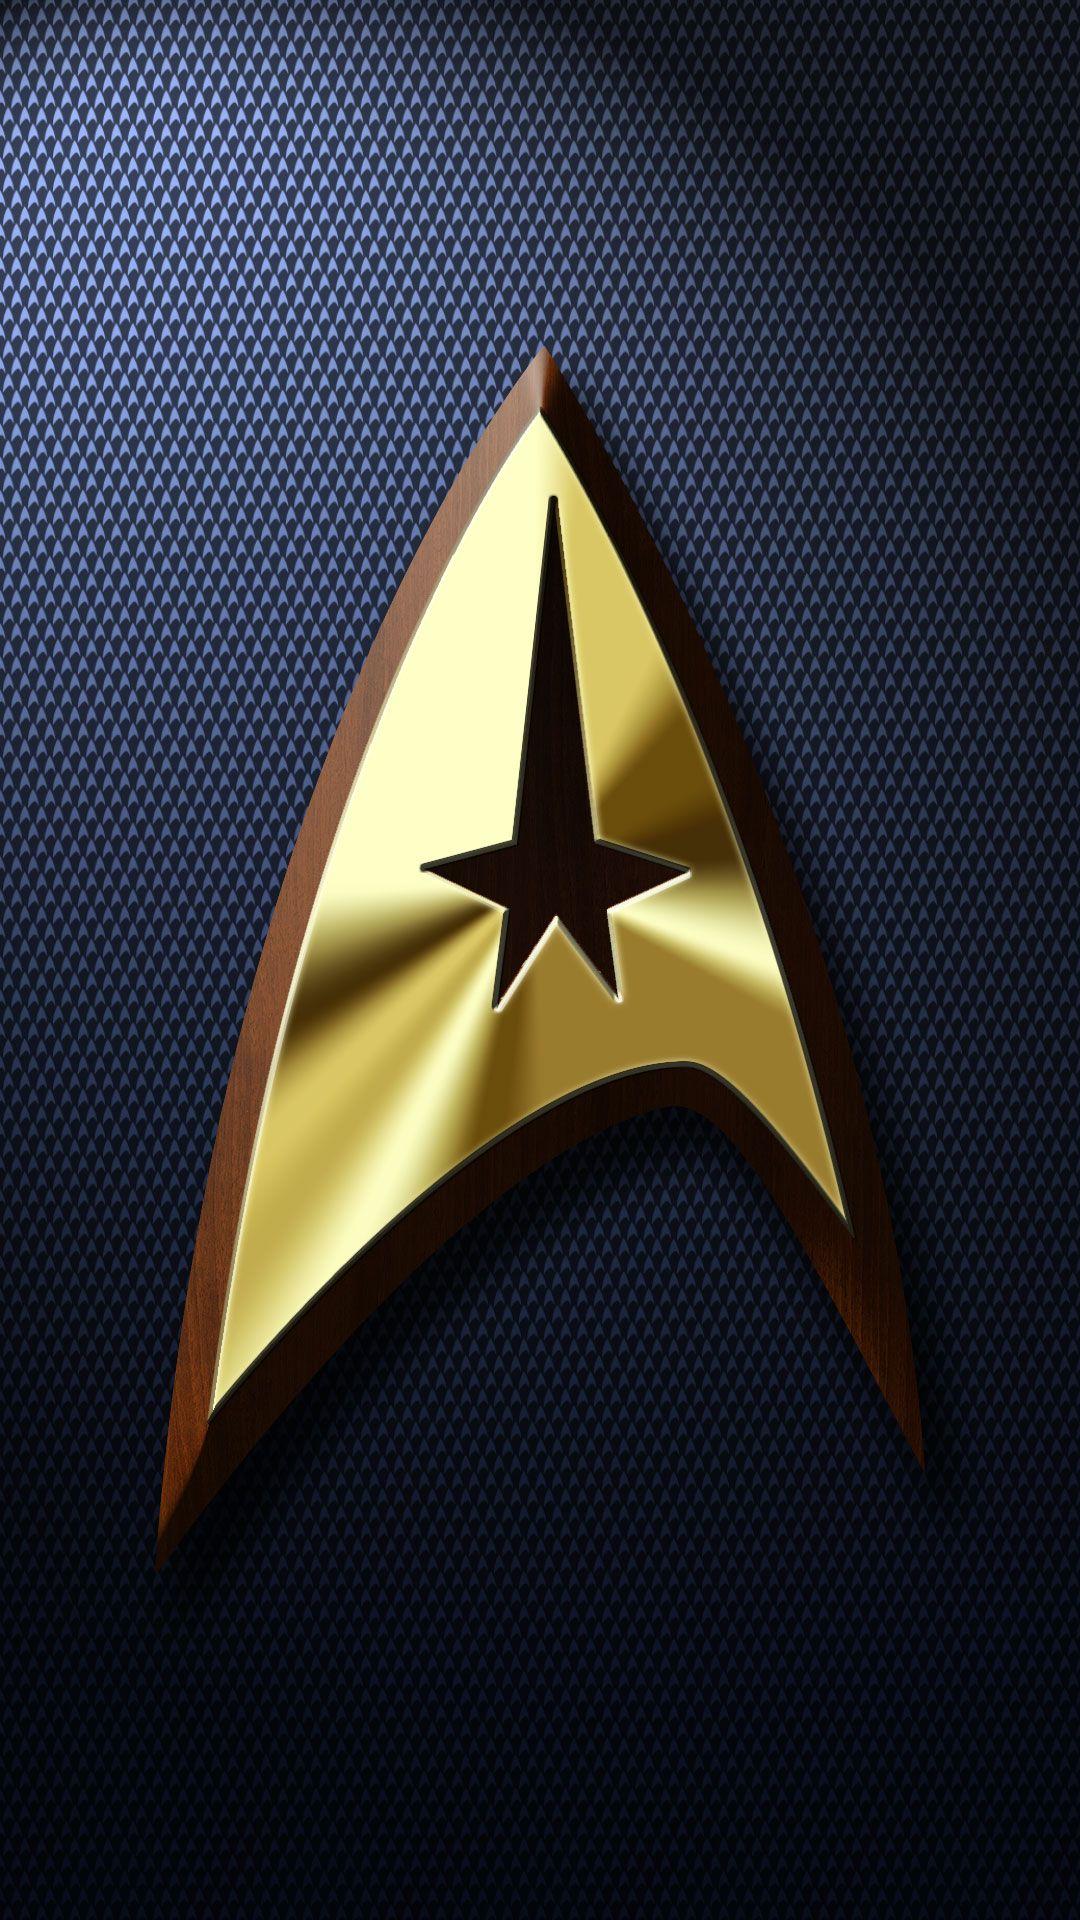 Star Trek Iphone Wallpapers Top Free Star Trek Iphone Backgrounds Wallpaperaccess